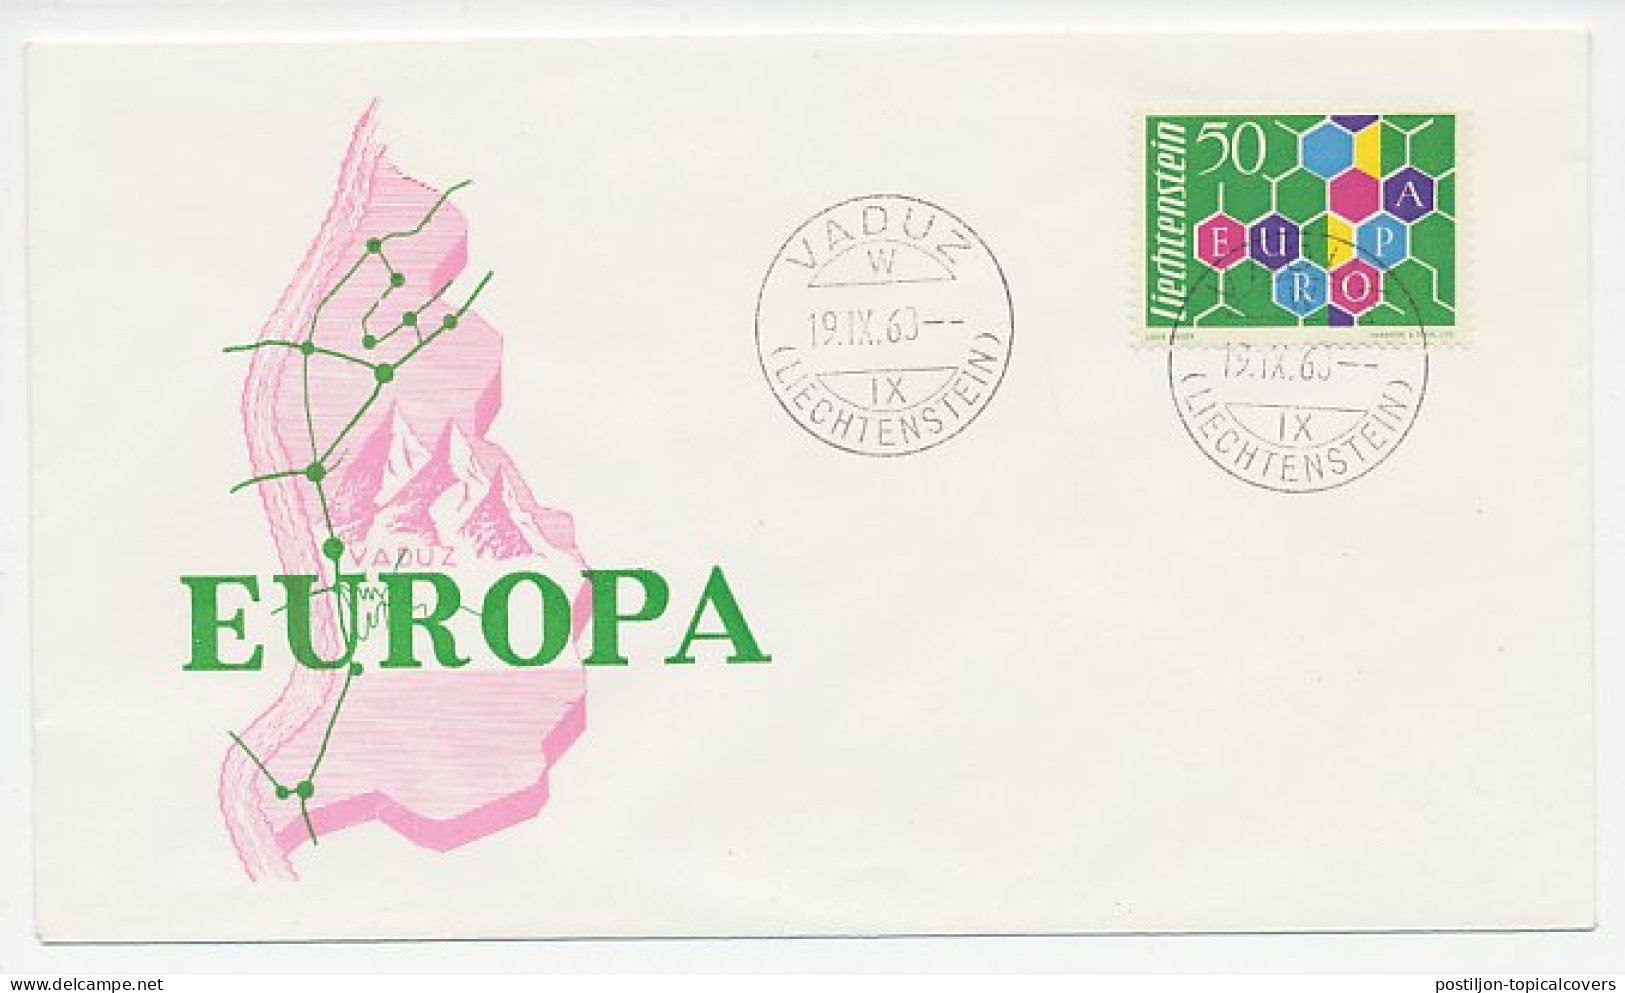 Cover / Postmark Liechtenstein 1960 Europa - European Community